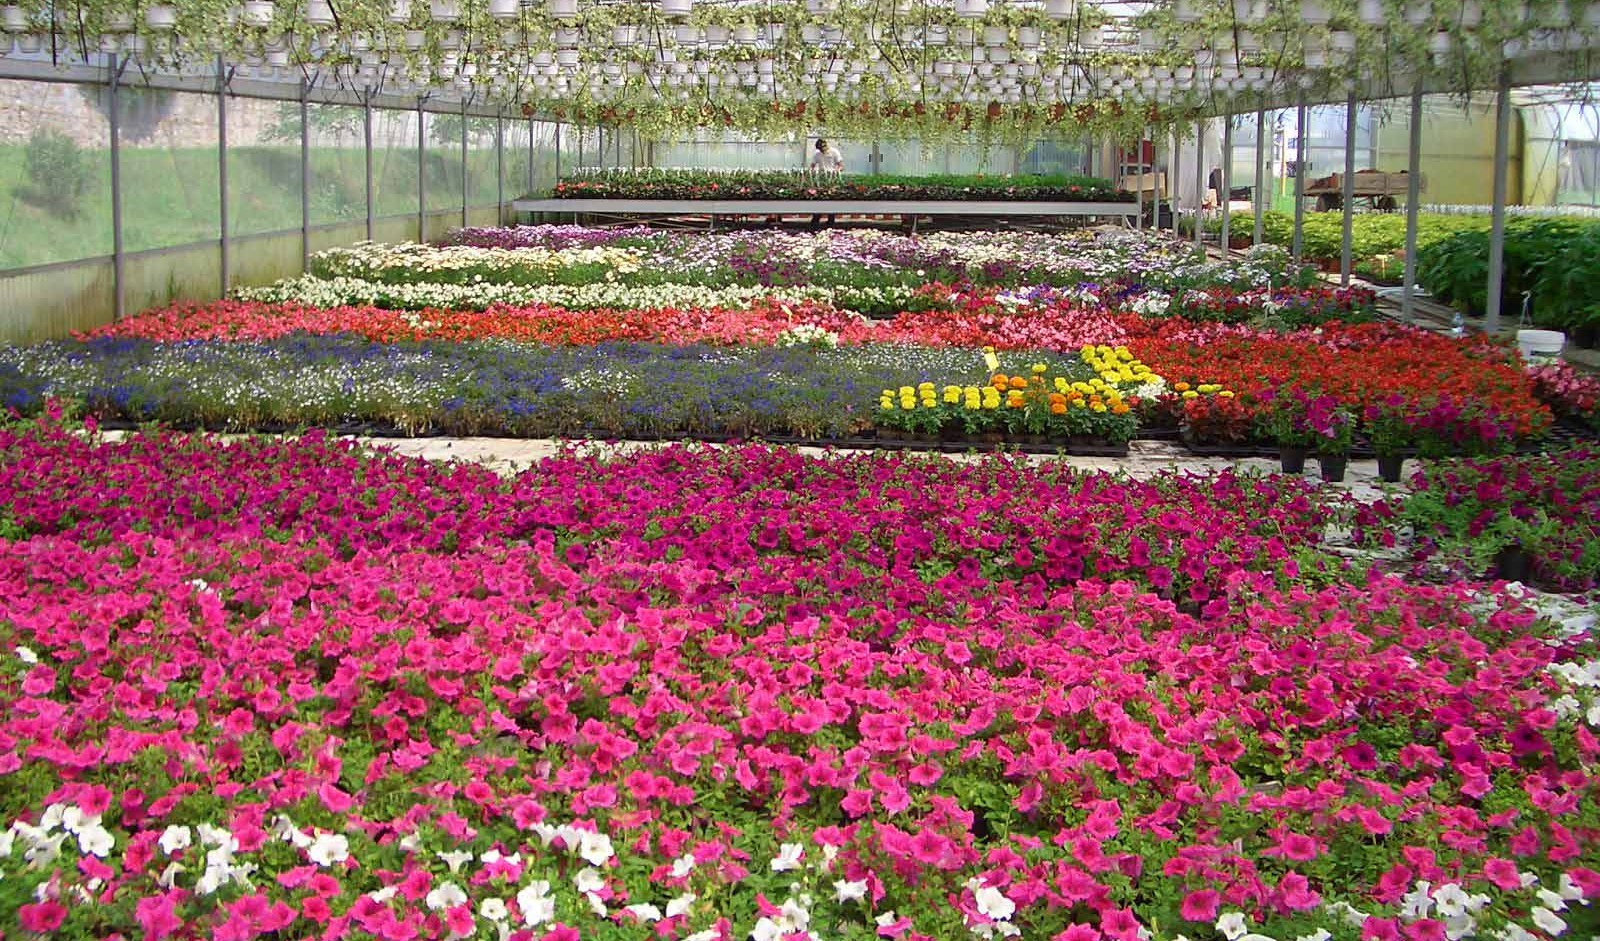 I fiori liguri in mostra ad Amsterdam tra quelli di oltre 115 paesi